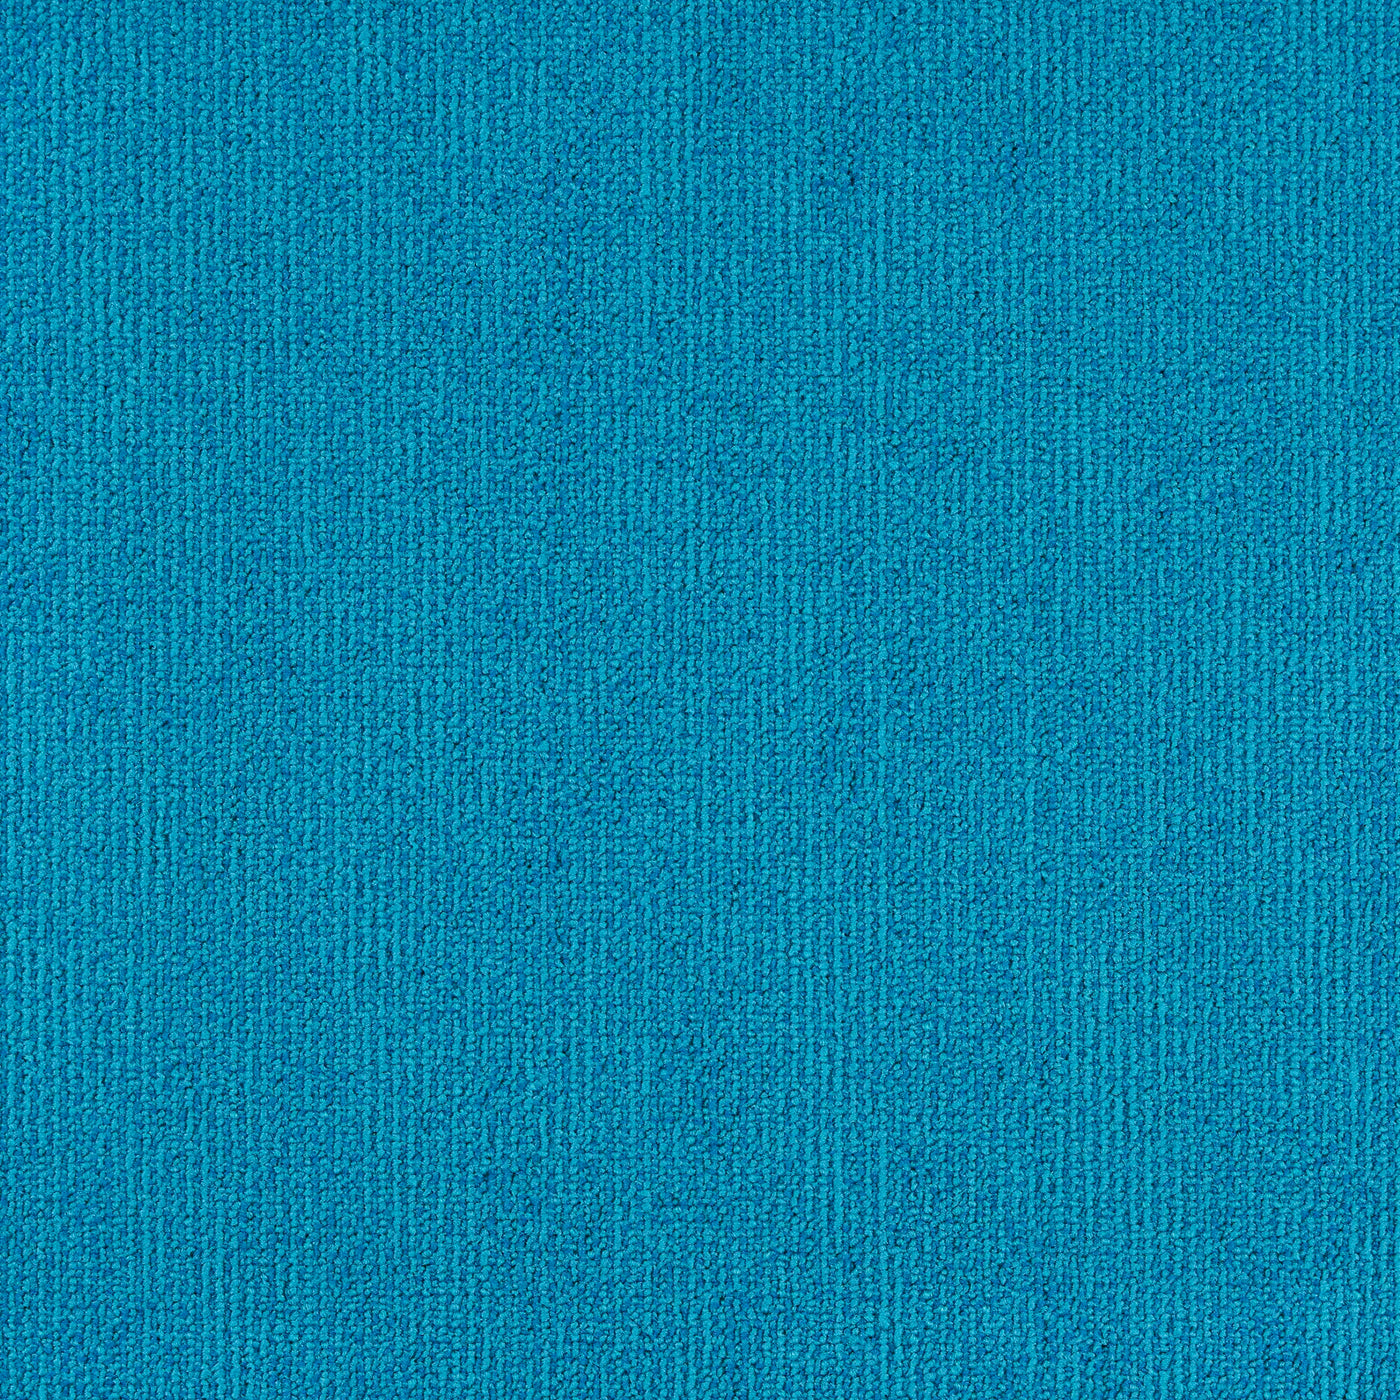 Illusion (Plain) - Innovflor Carpet Tiles